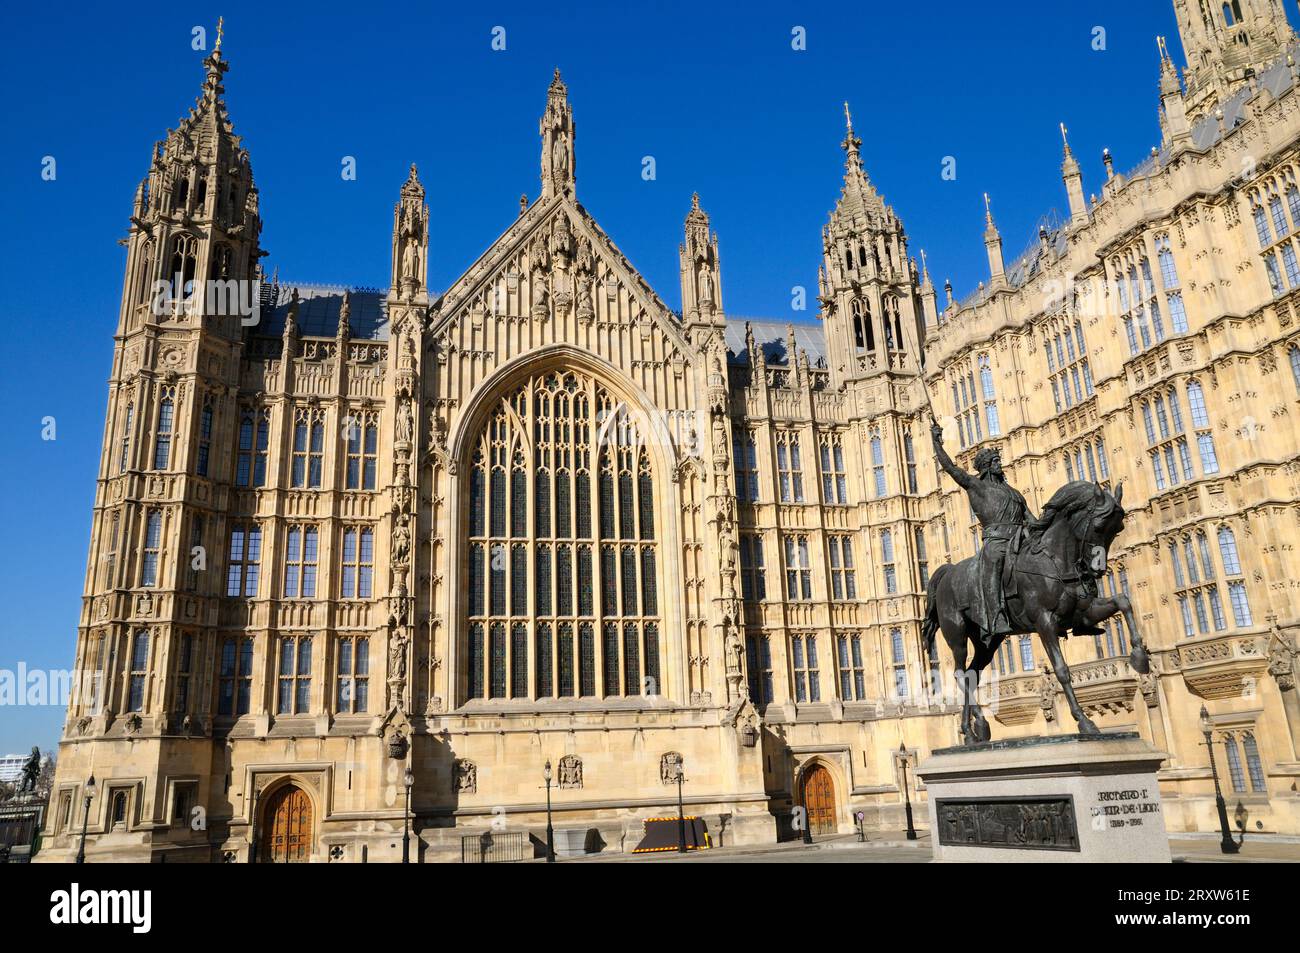 Palazzo di Westminster / le Houses of Parliament e la statua di Richard Coeur de Lion (Richard the Lionheart), Old Palace Yard, Londra, Inghilterra, Regno Unito Foto Stock